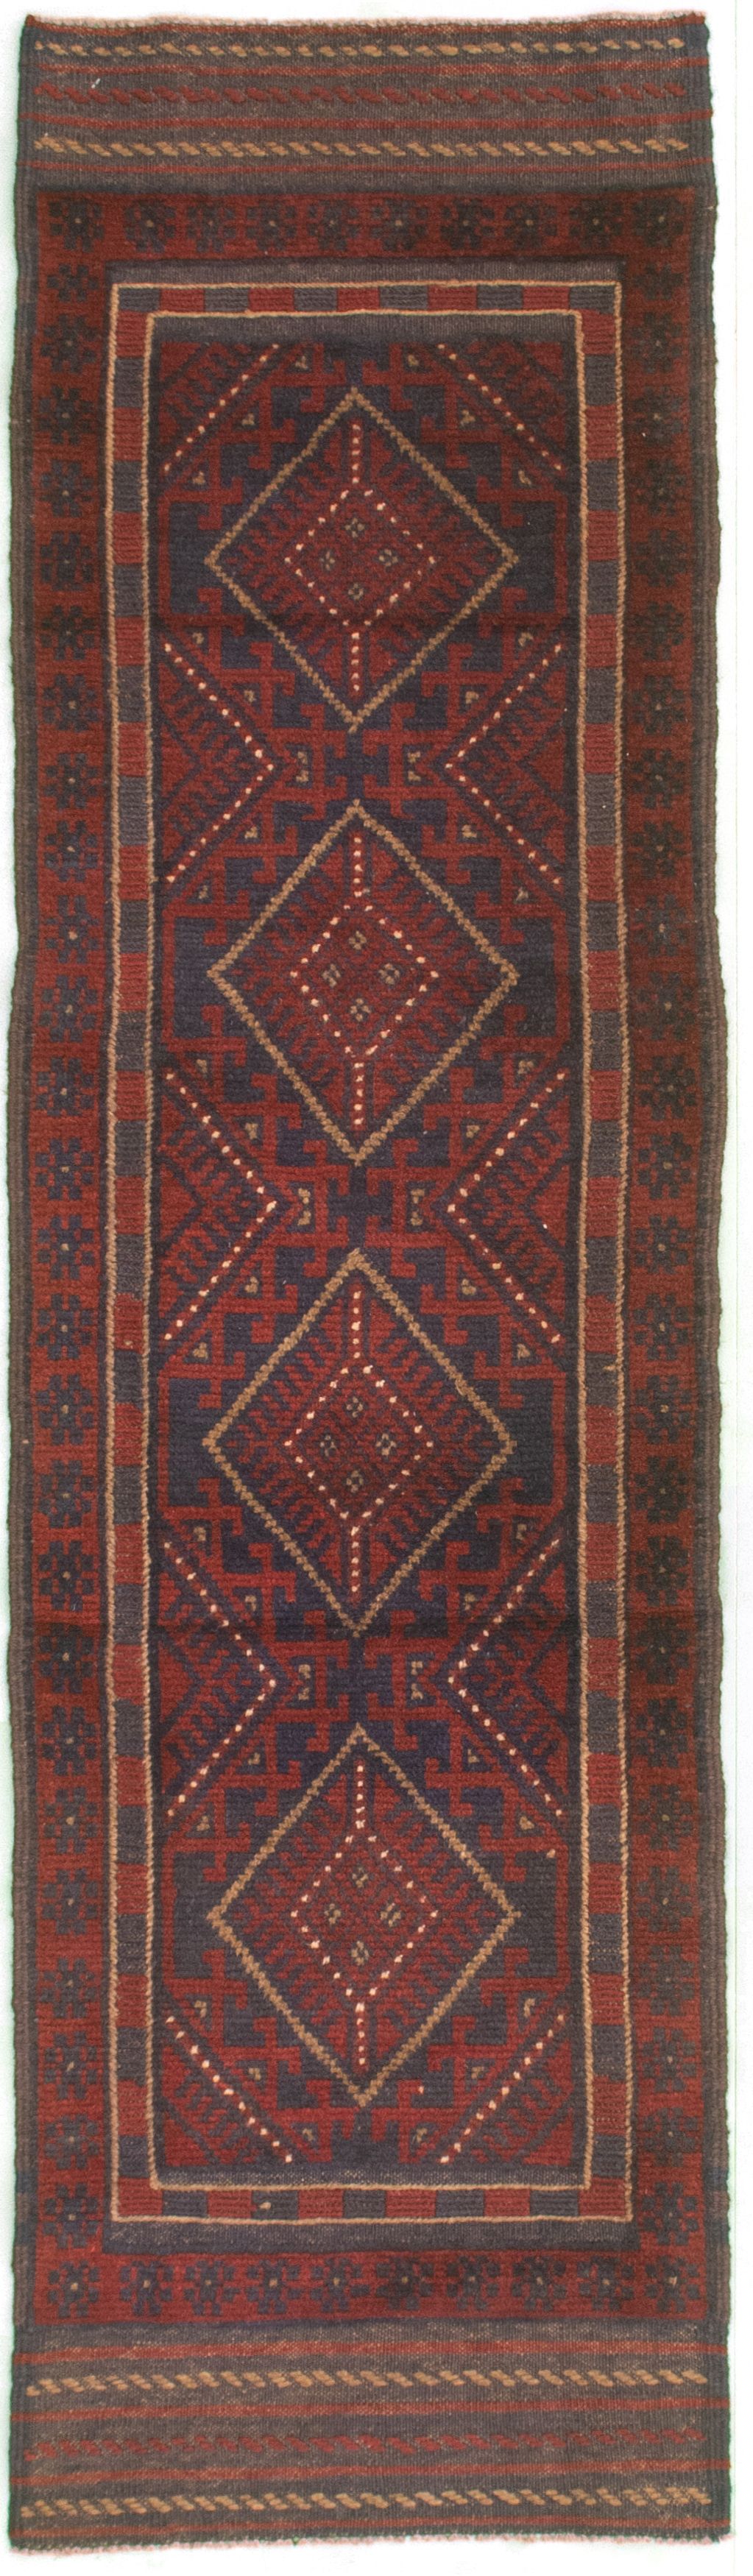 Hand-knotted Tajik Caucasian Dark Navy Wool Rug 1'11" x 7'10" Size: 1'11" x 7'10"  